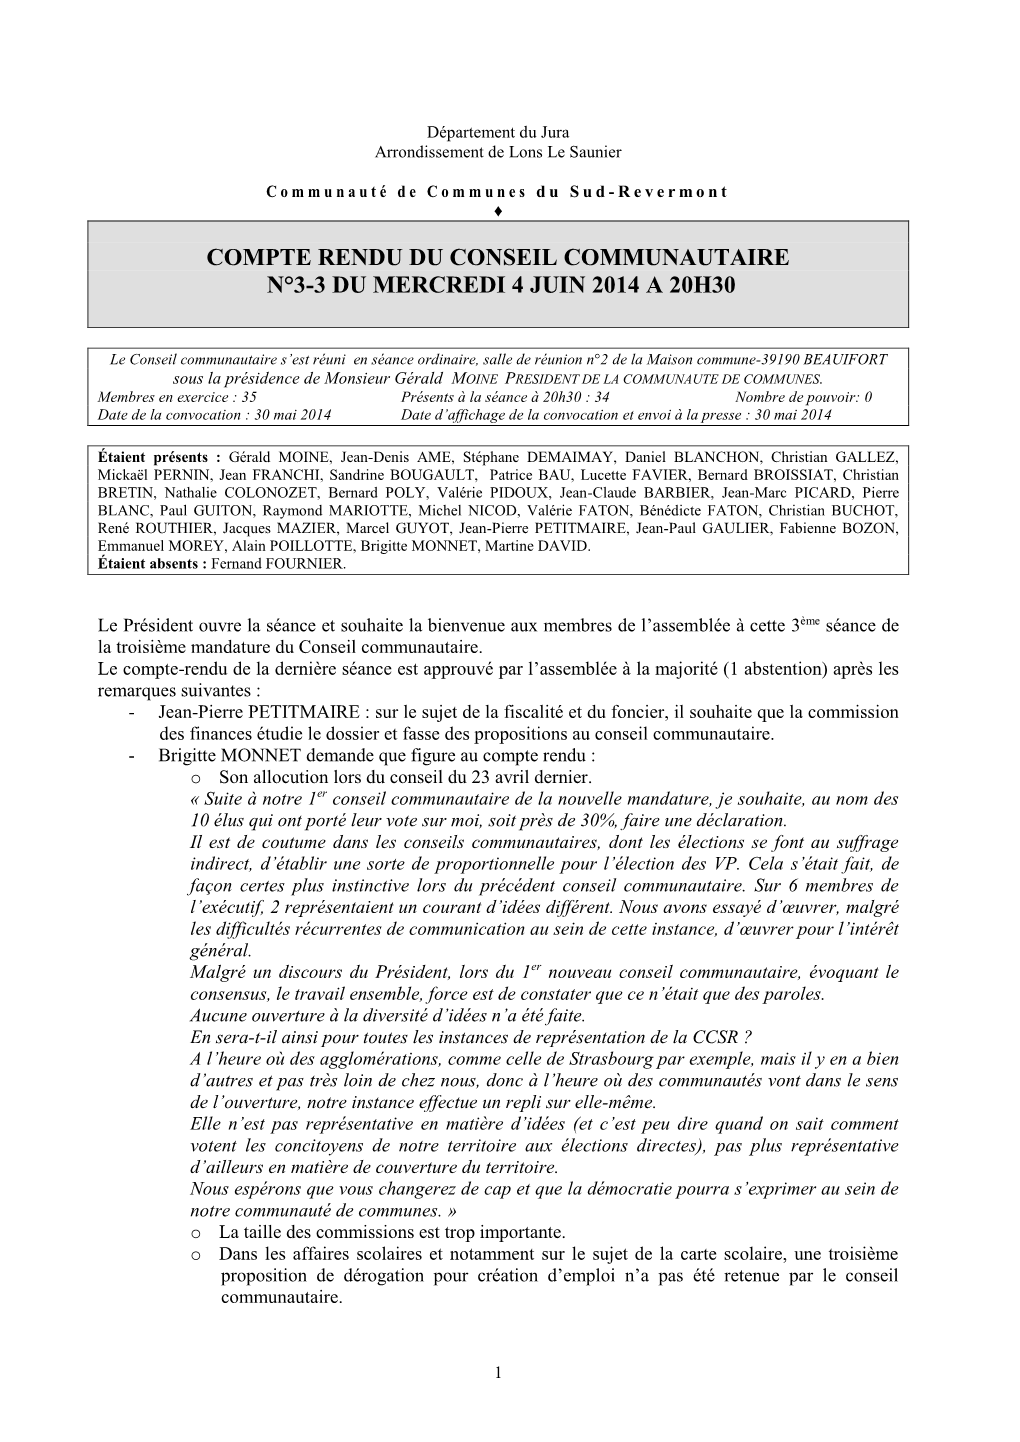 Compte Rendu Du Conseil Communautaire N°3-3 Du Mercredi 4 Juin 2014 a 20H30